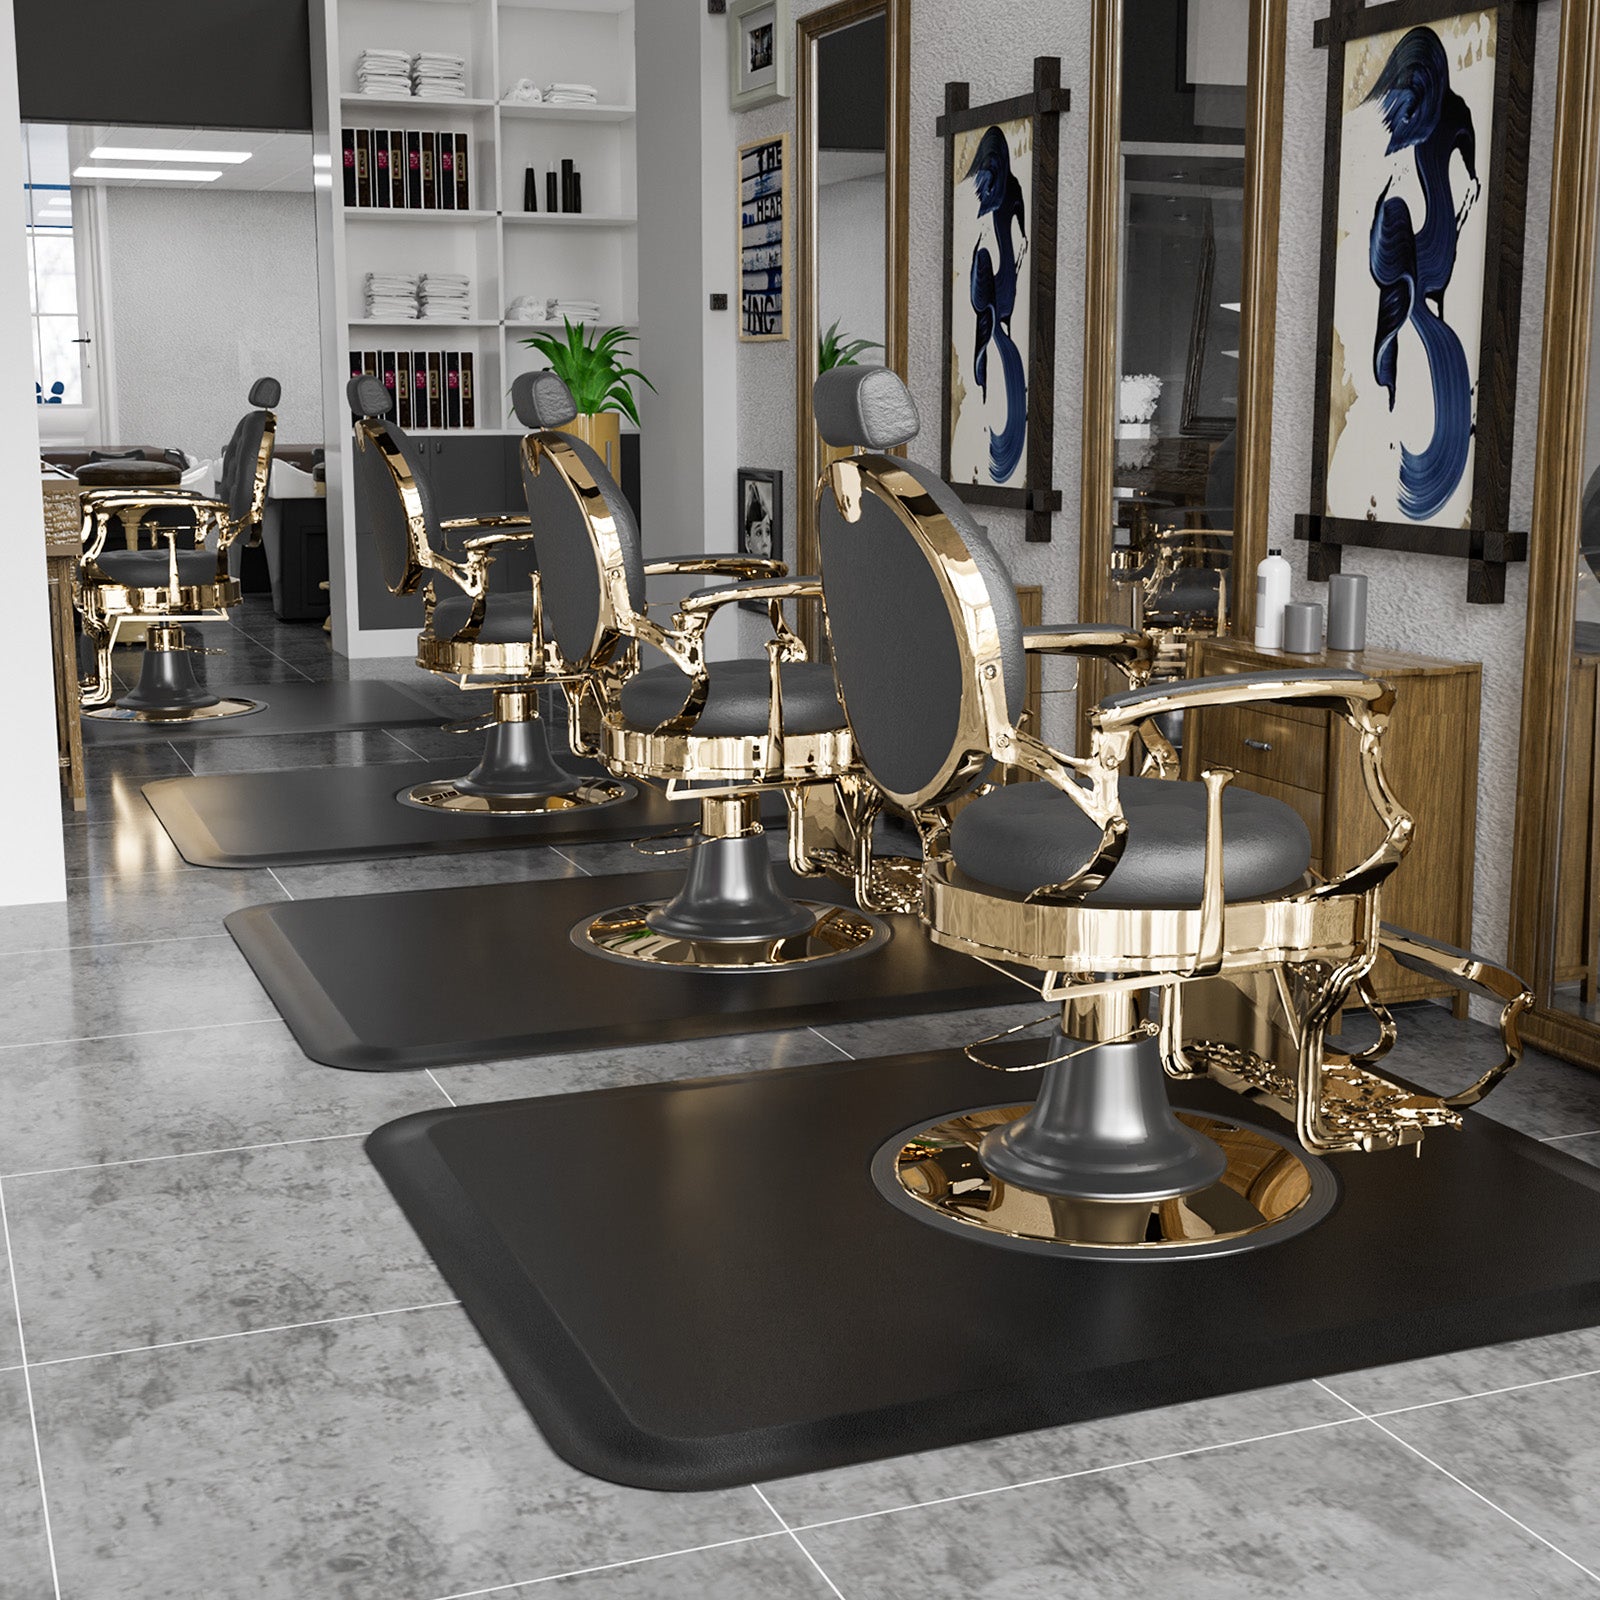 OmySalon 4’x 5’x 1/2'' Thick Salon Mat Barber Floor Mat for Round Base